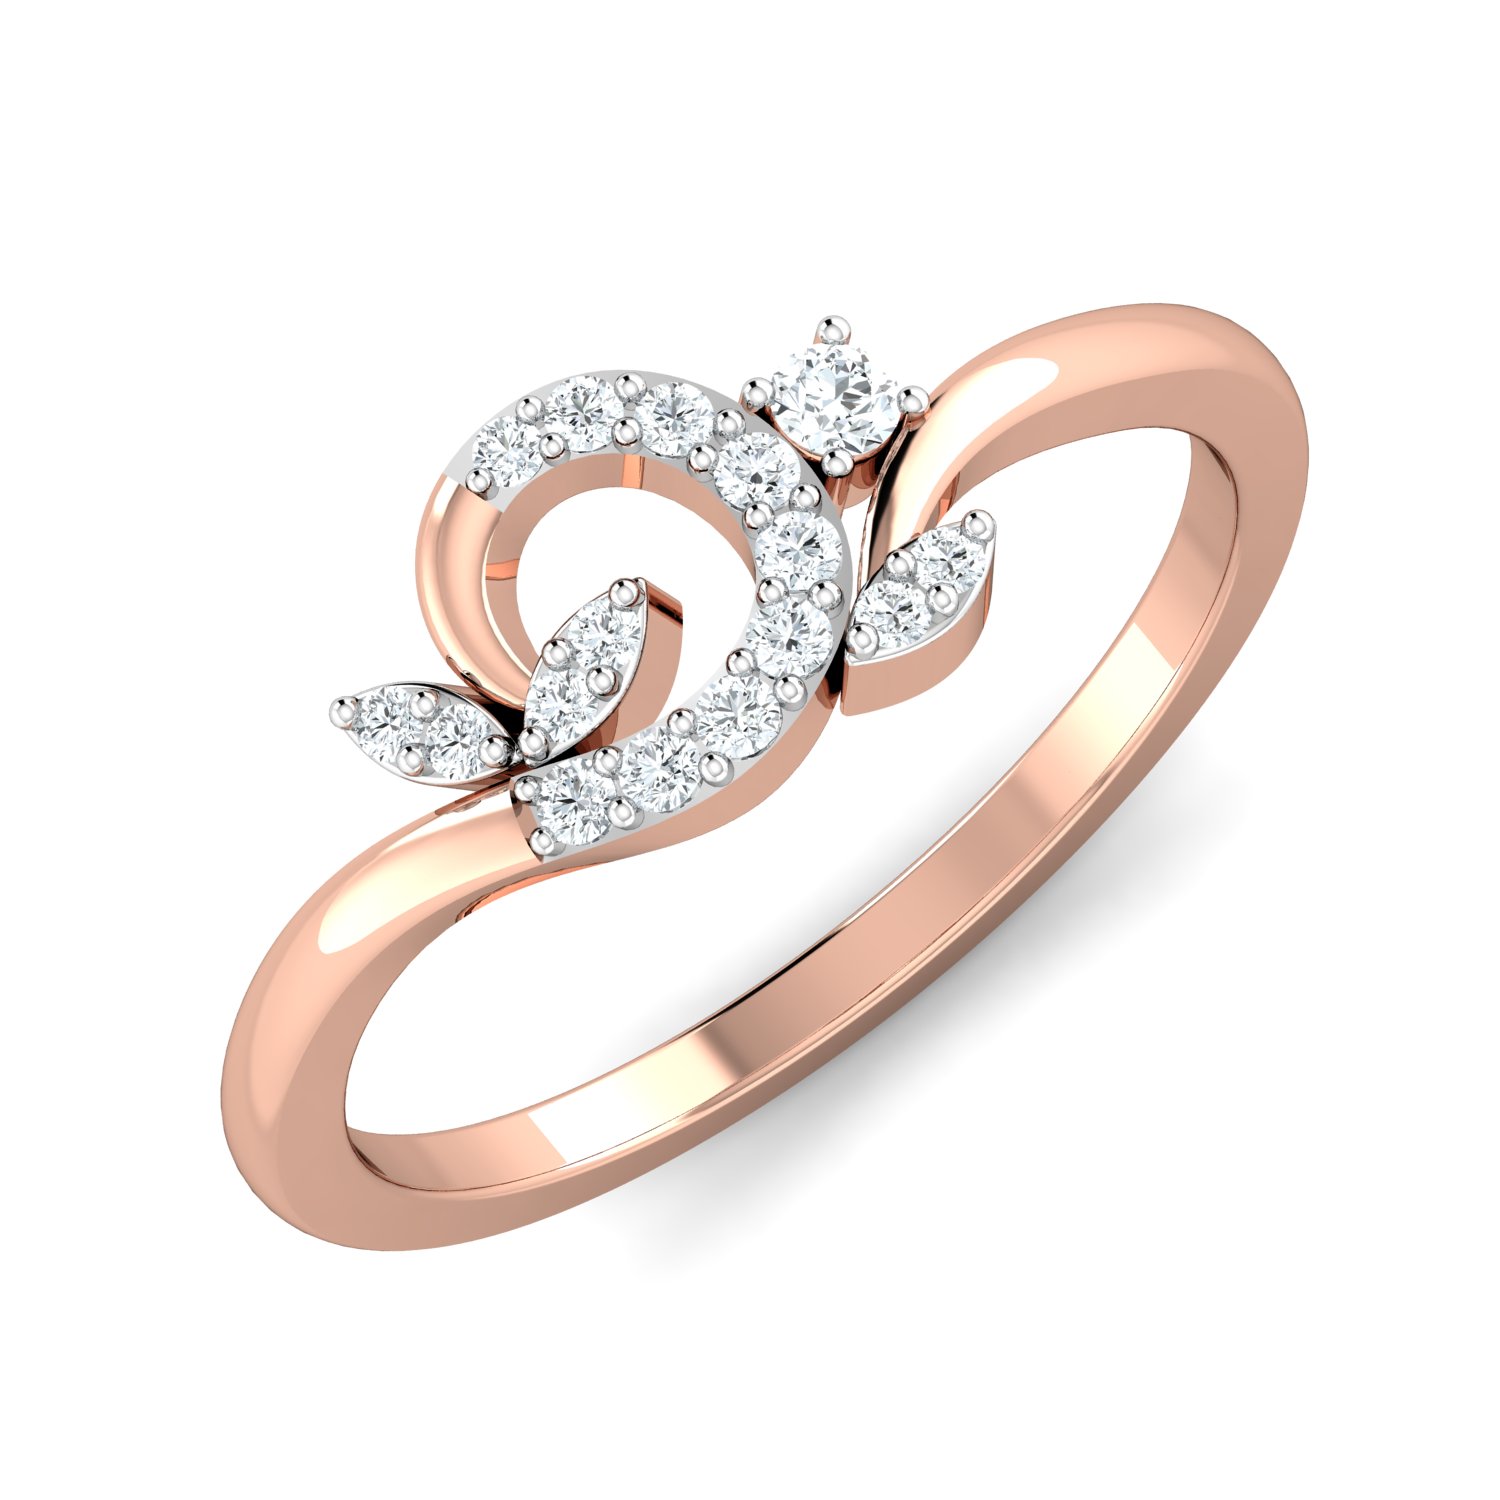 Buy Elegant Ridged Leaf Motif Ring At Best Price | Karuri Jewellers